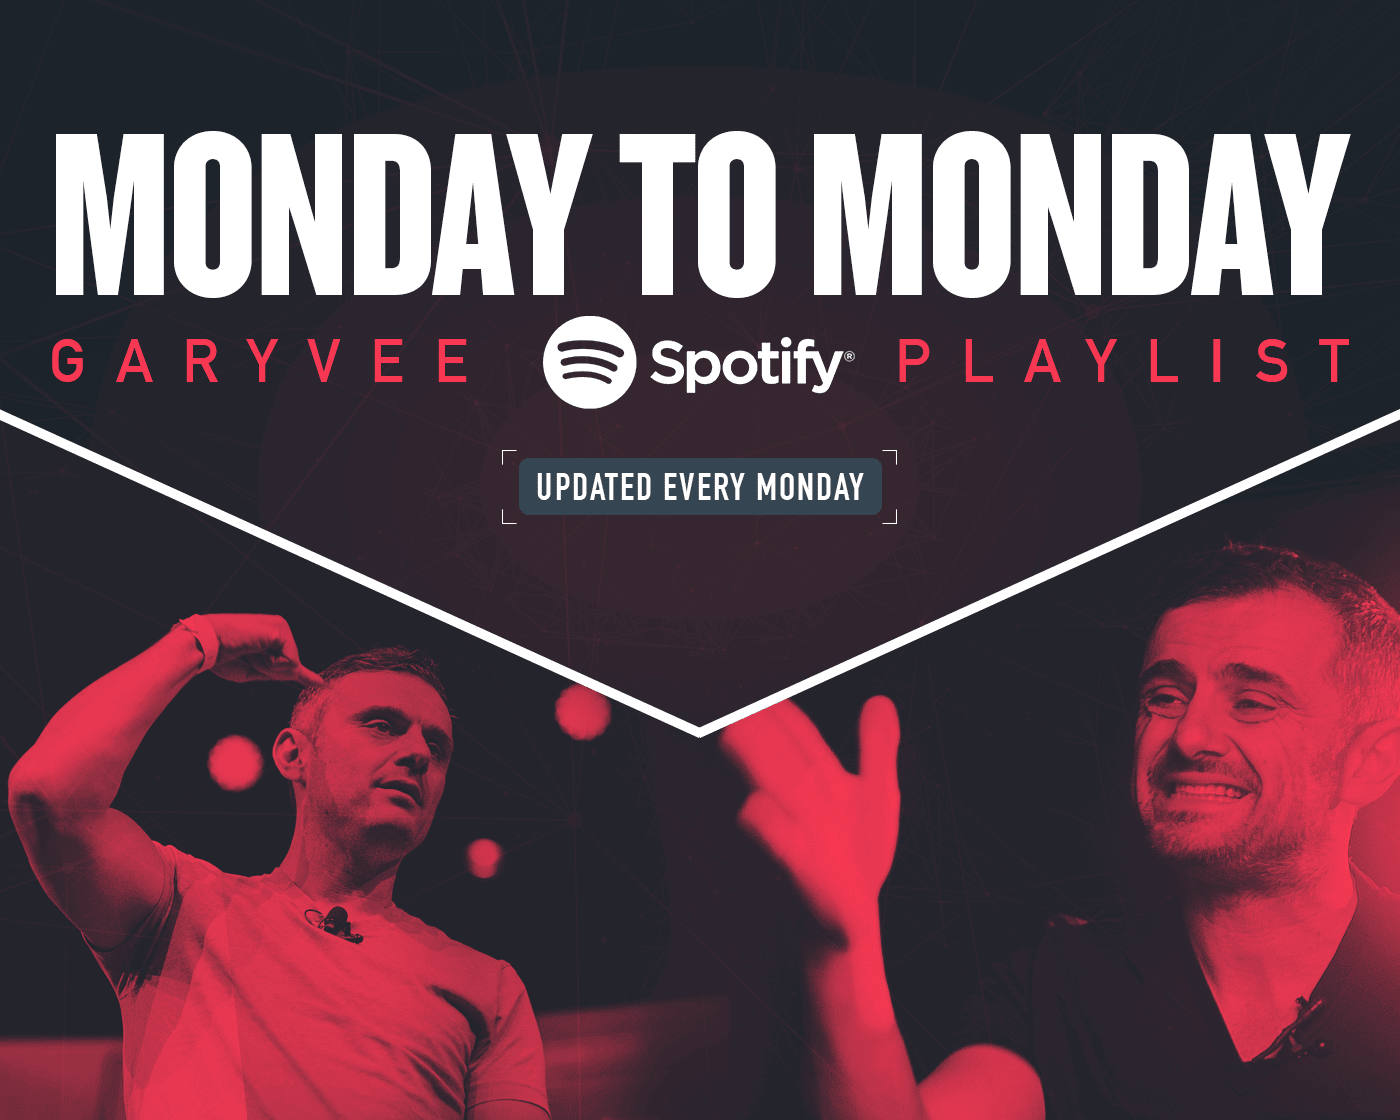 Monday to Monday by GaryVee